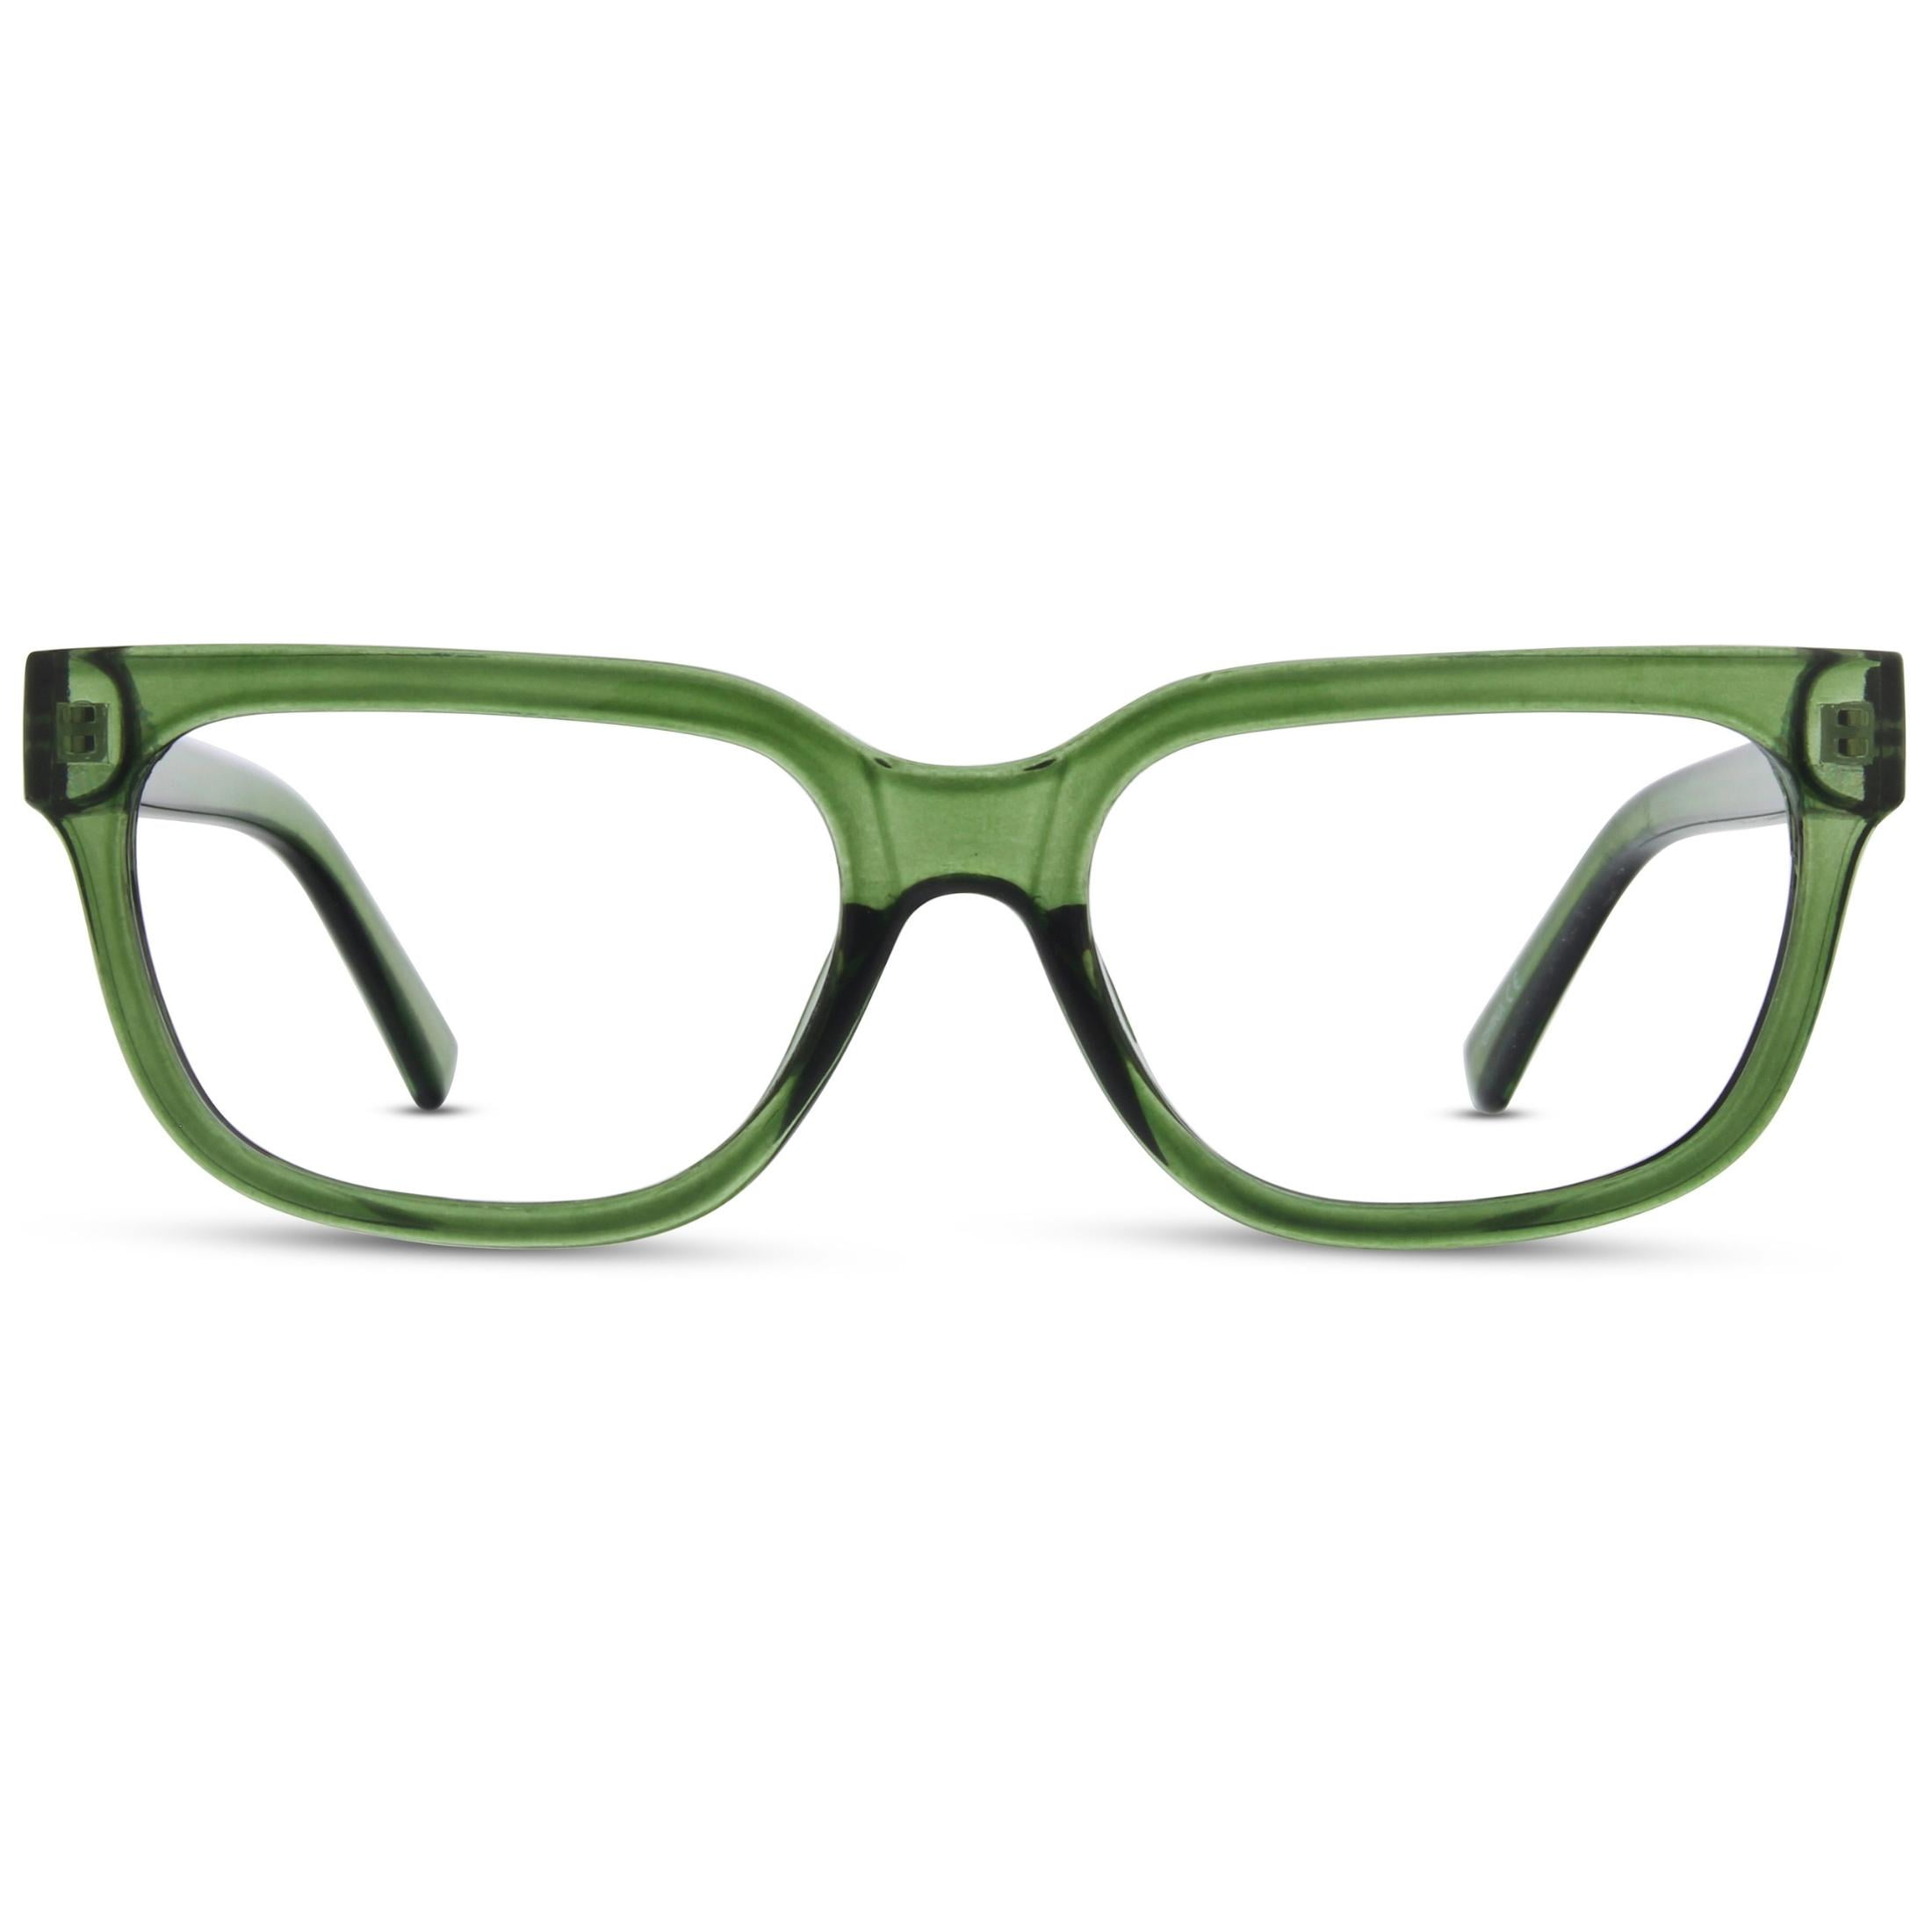 Prism Glasses - L.A. Green